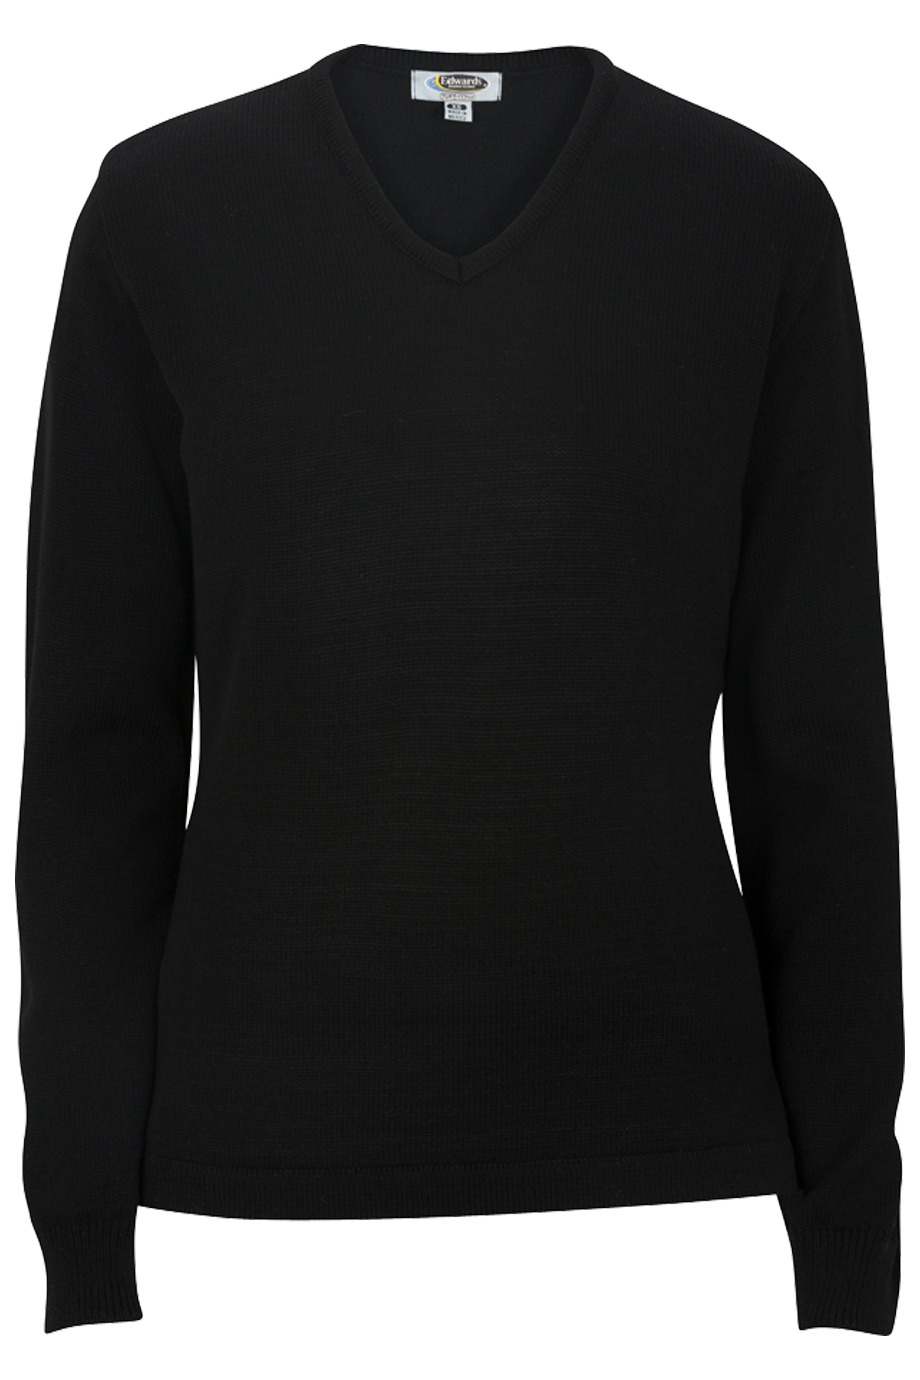 Edwards Garment 7065 - Ladies' V-Neck Sweater Tuff-Pil Plus